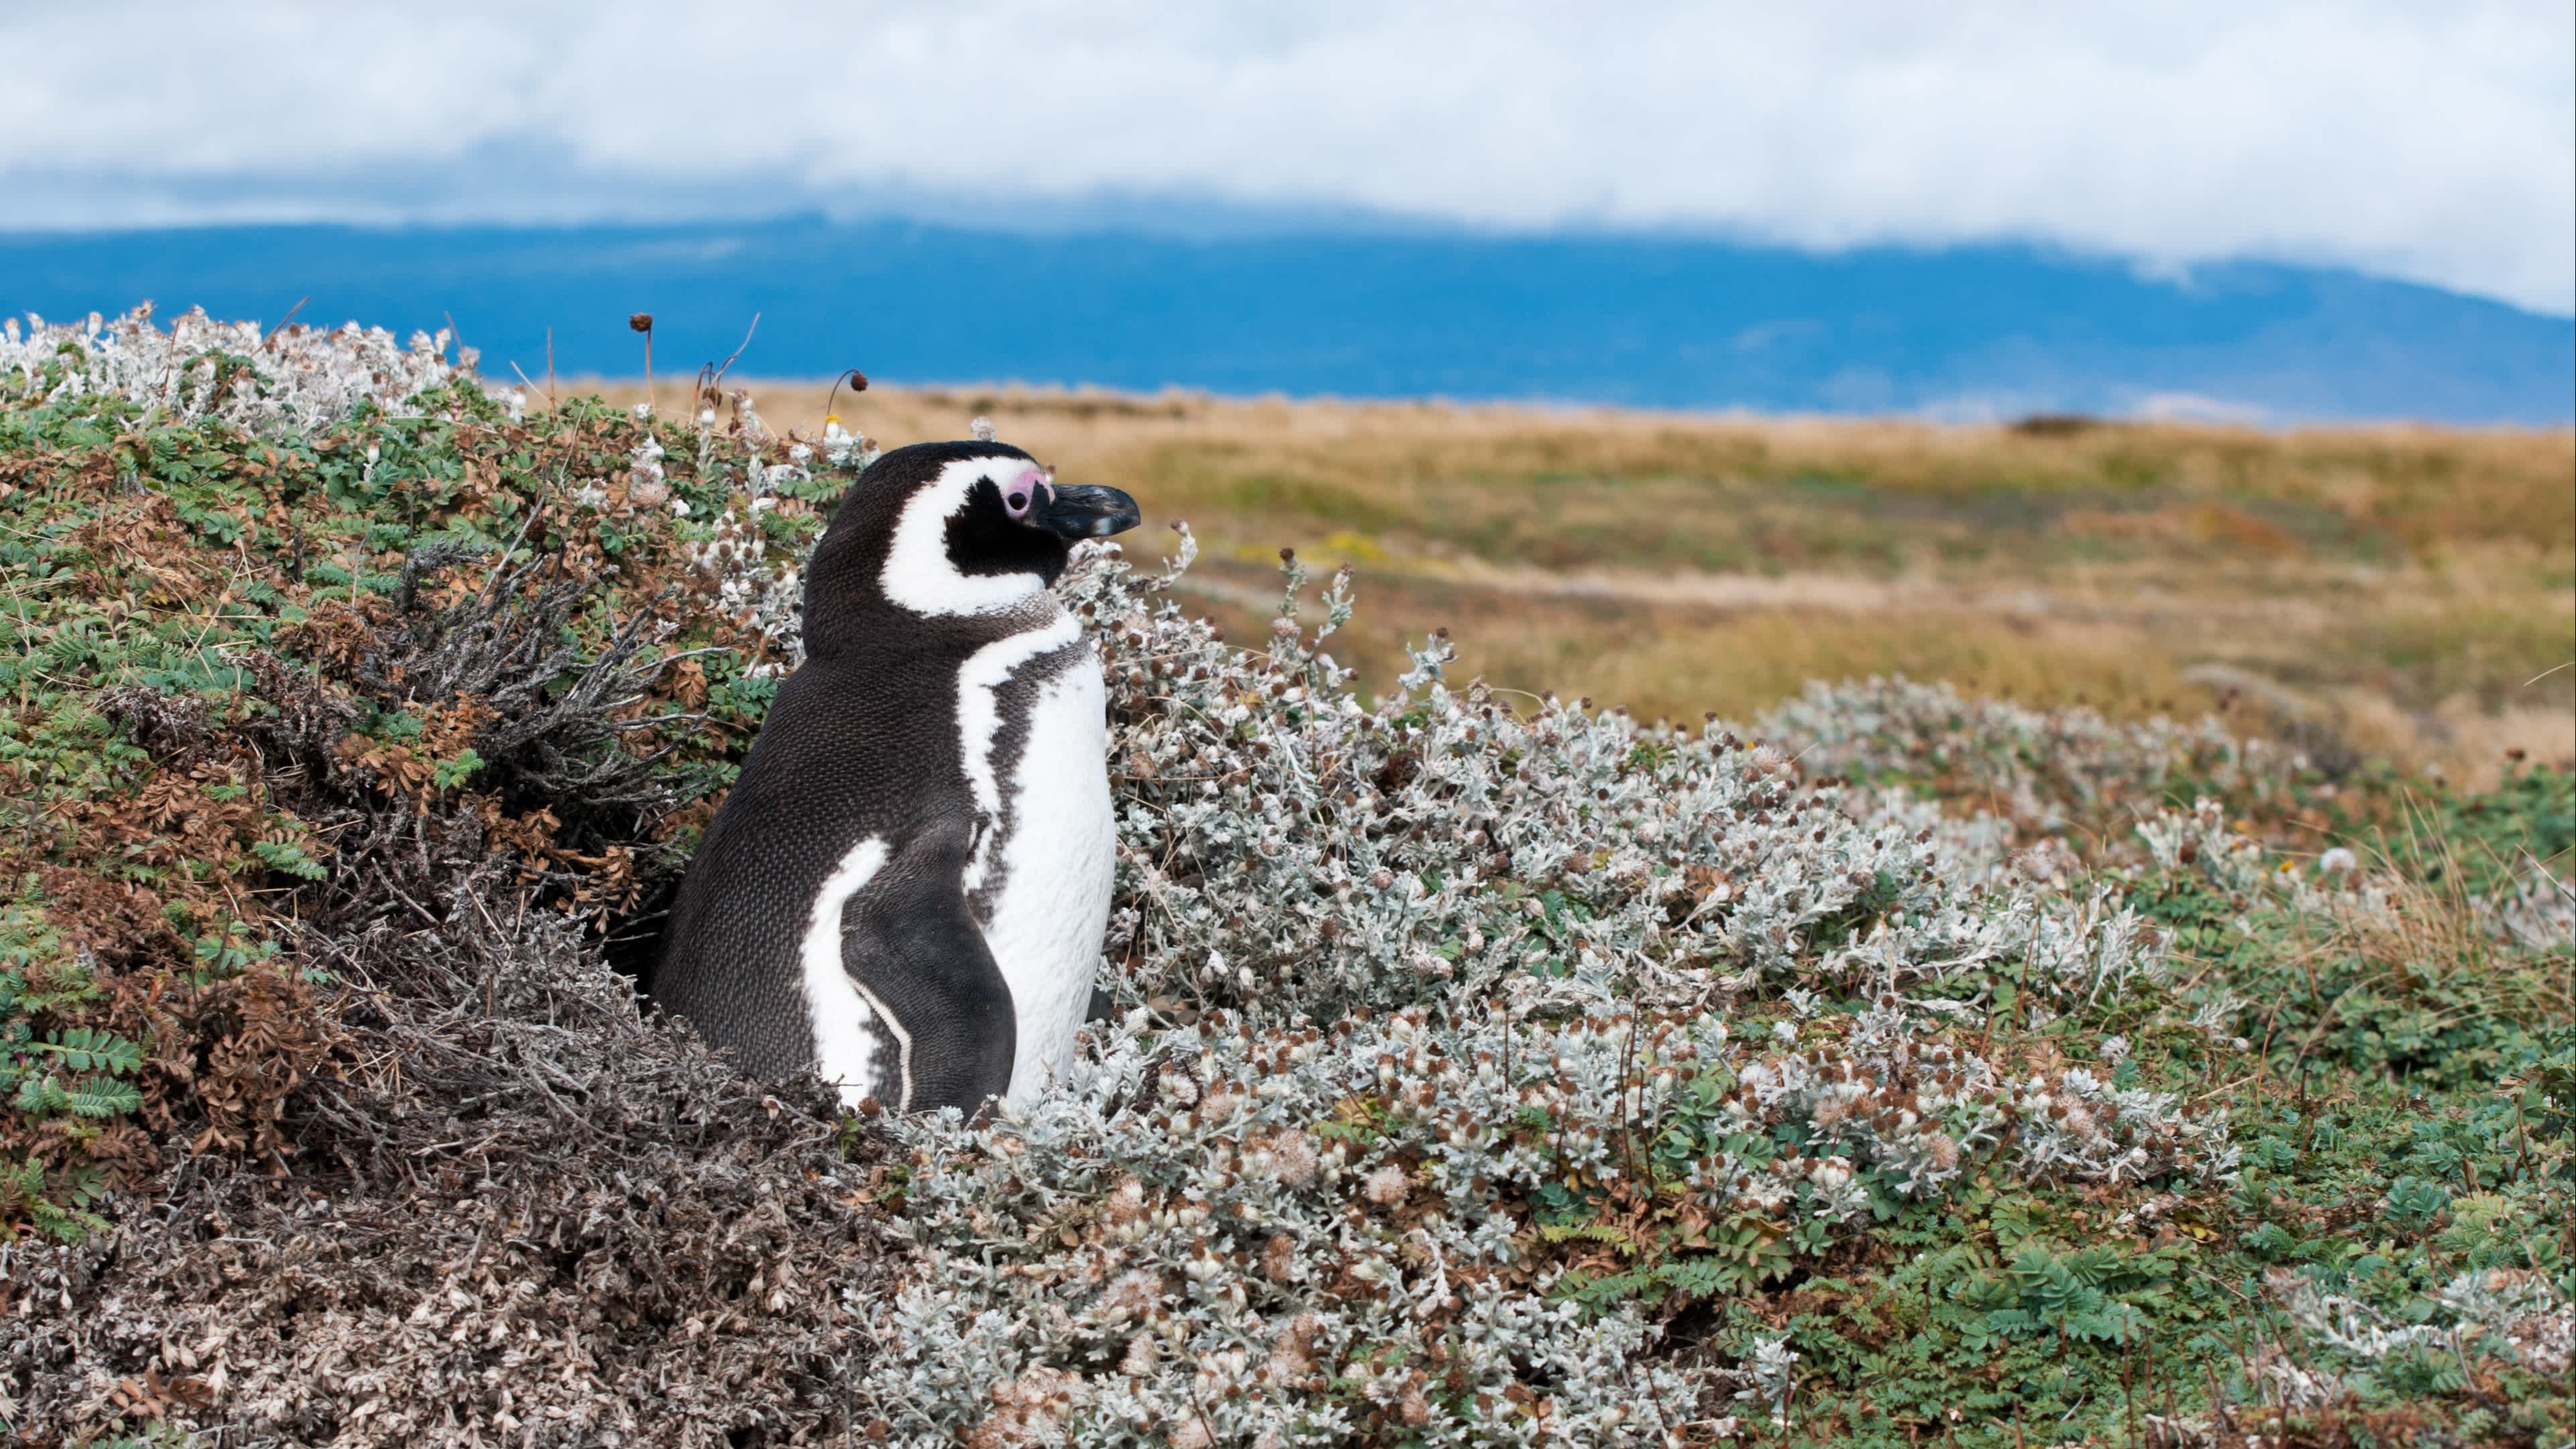 Un pingouin sur son nid, Patagonie, Chili.

